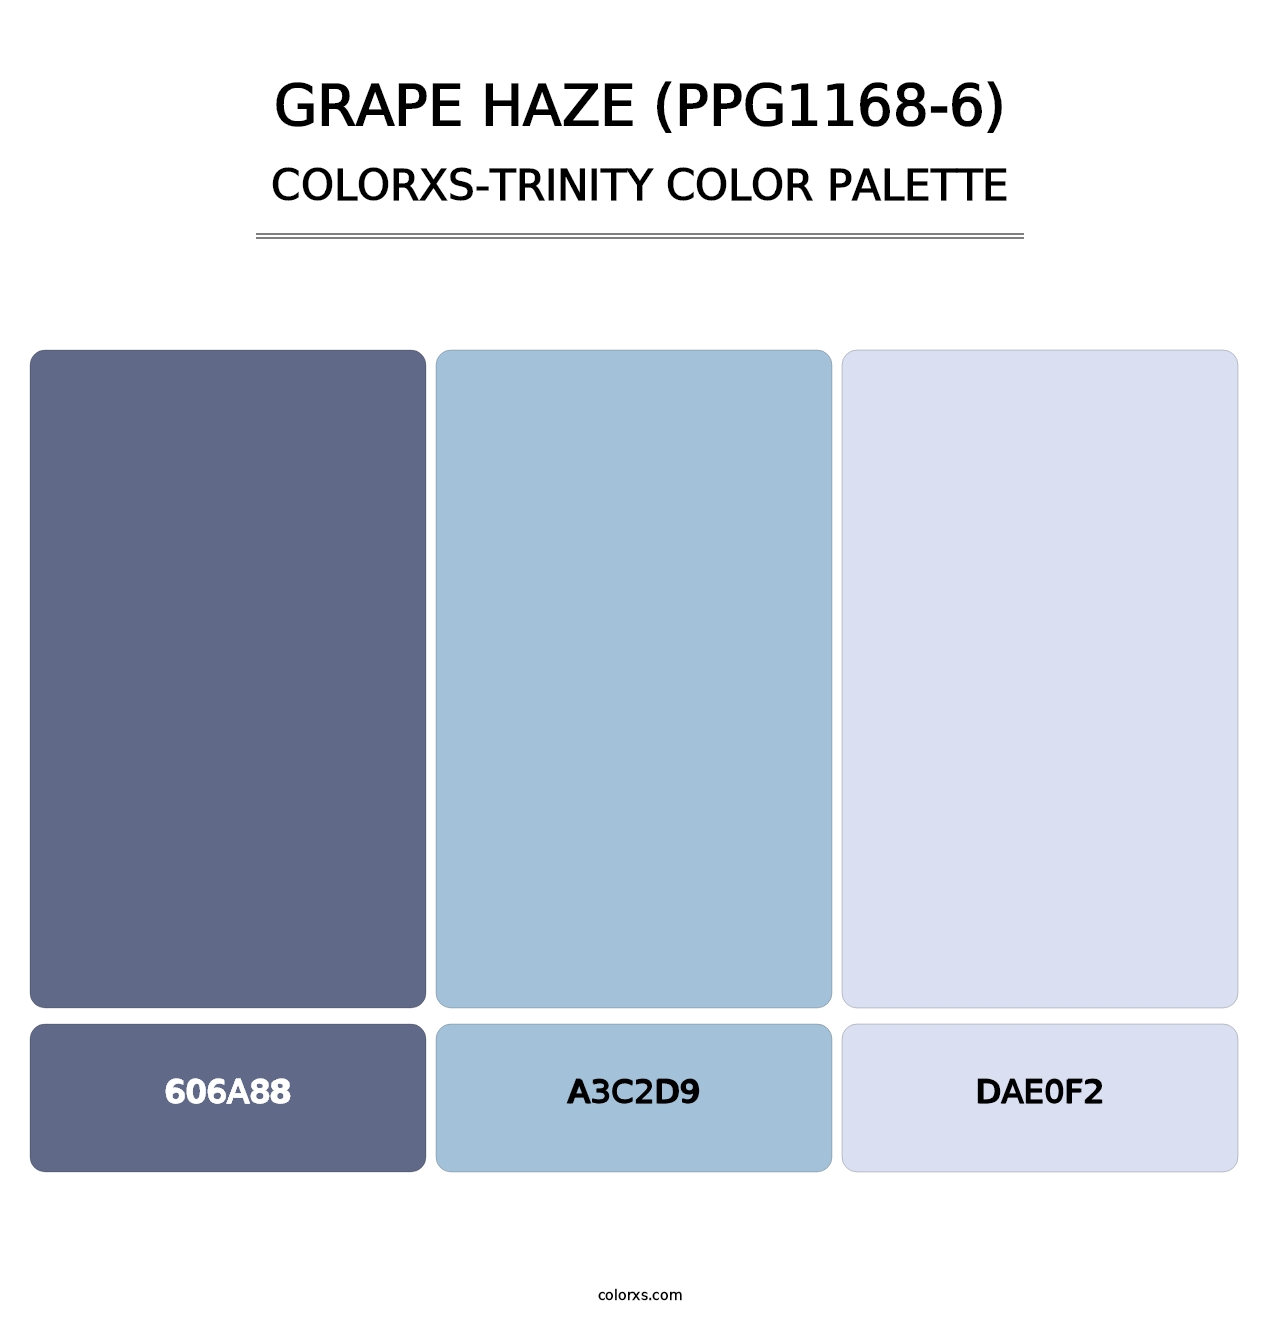 Grape Haze (PPG1168-6) - Colorxs Trinity Palette